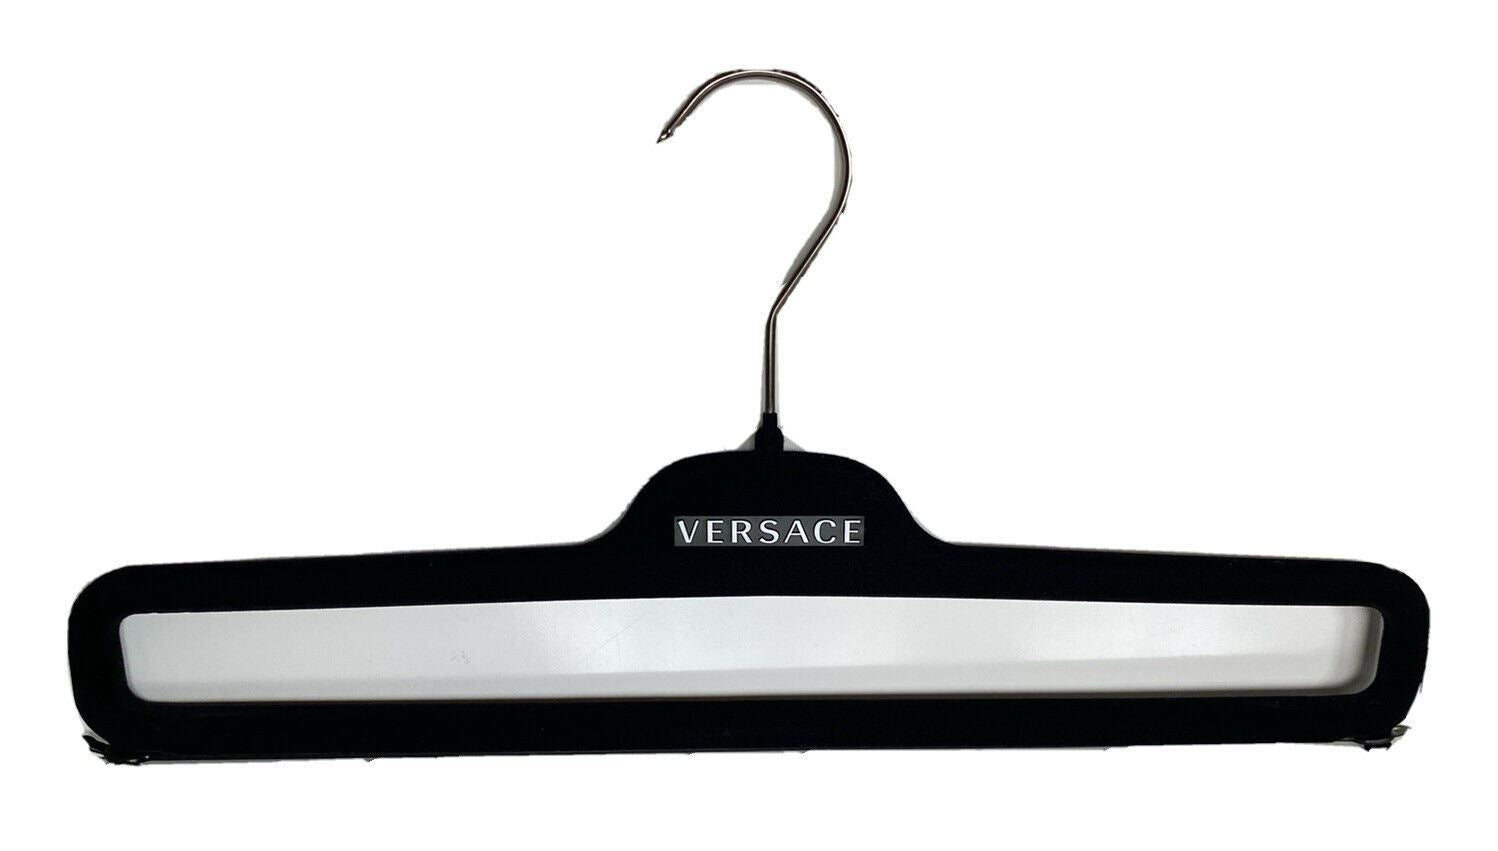 VERSACE Black Velvet 15" Pants Hangers with Silver Hardware